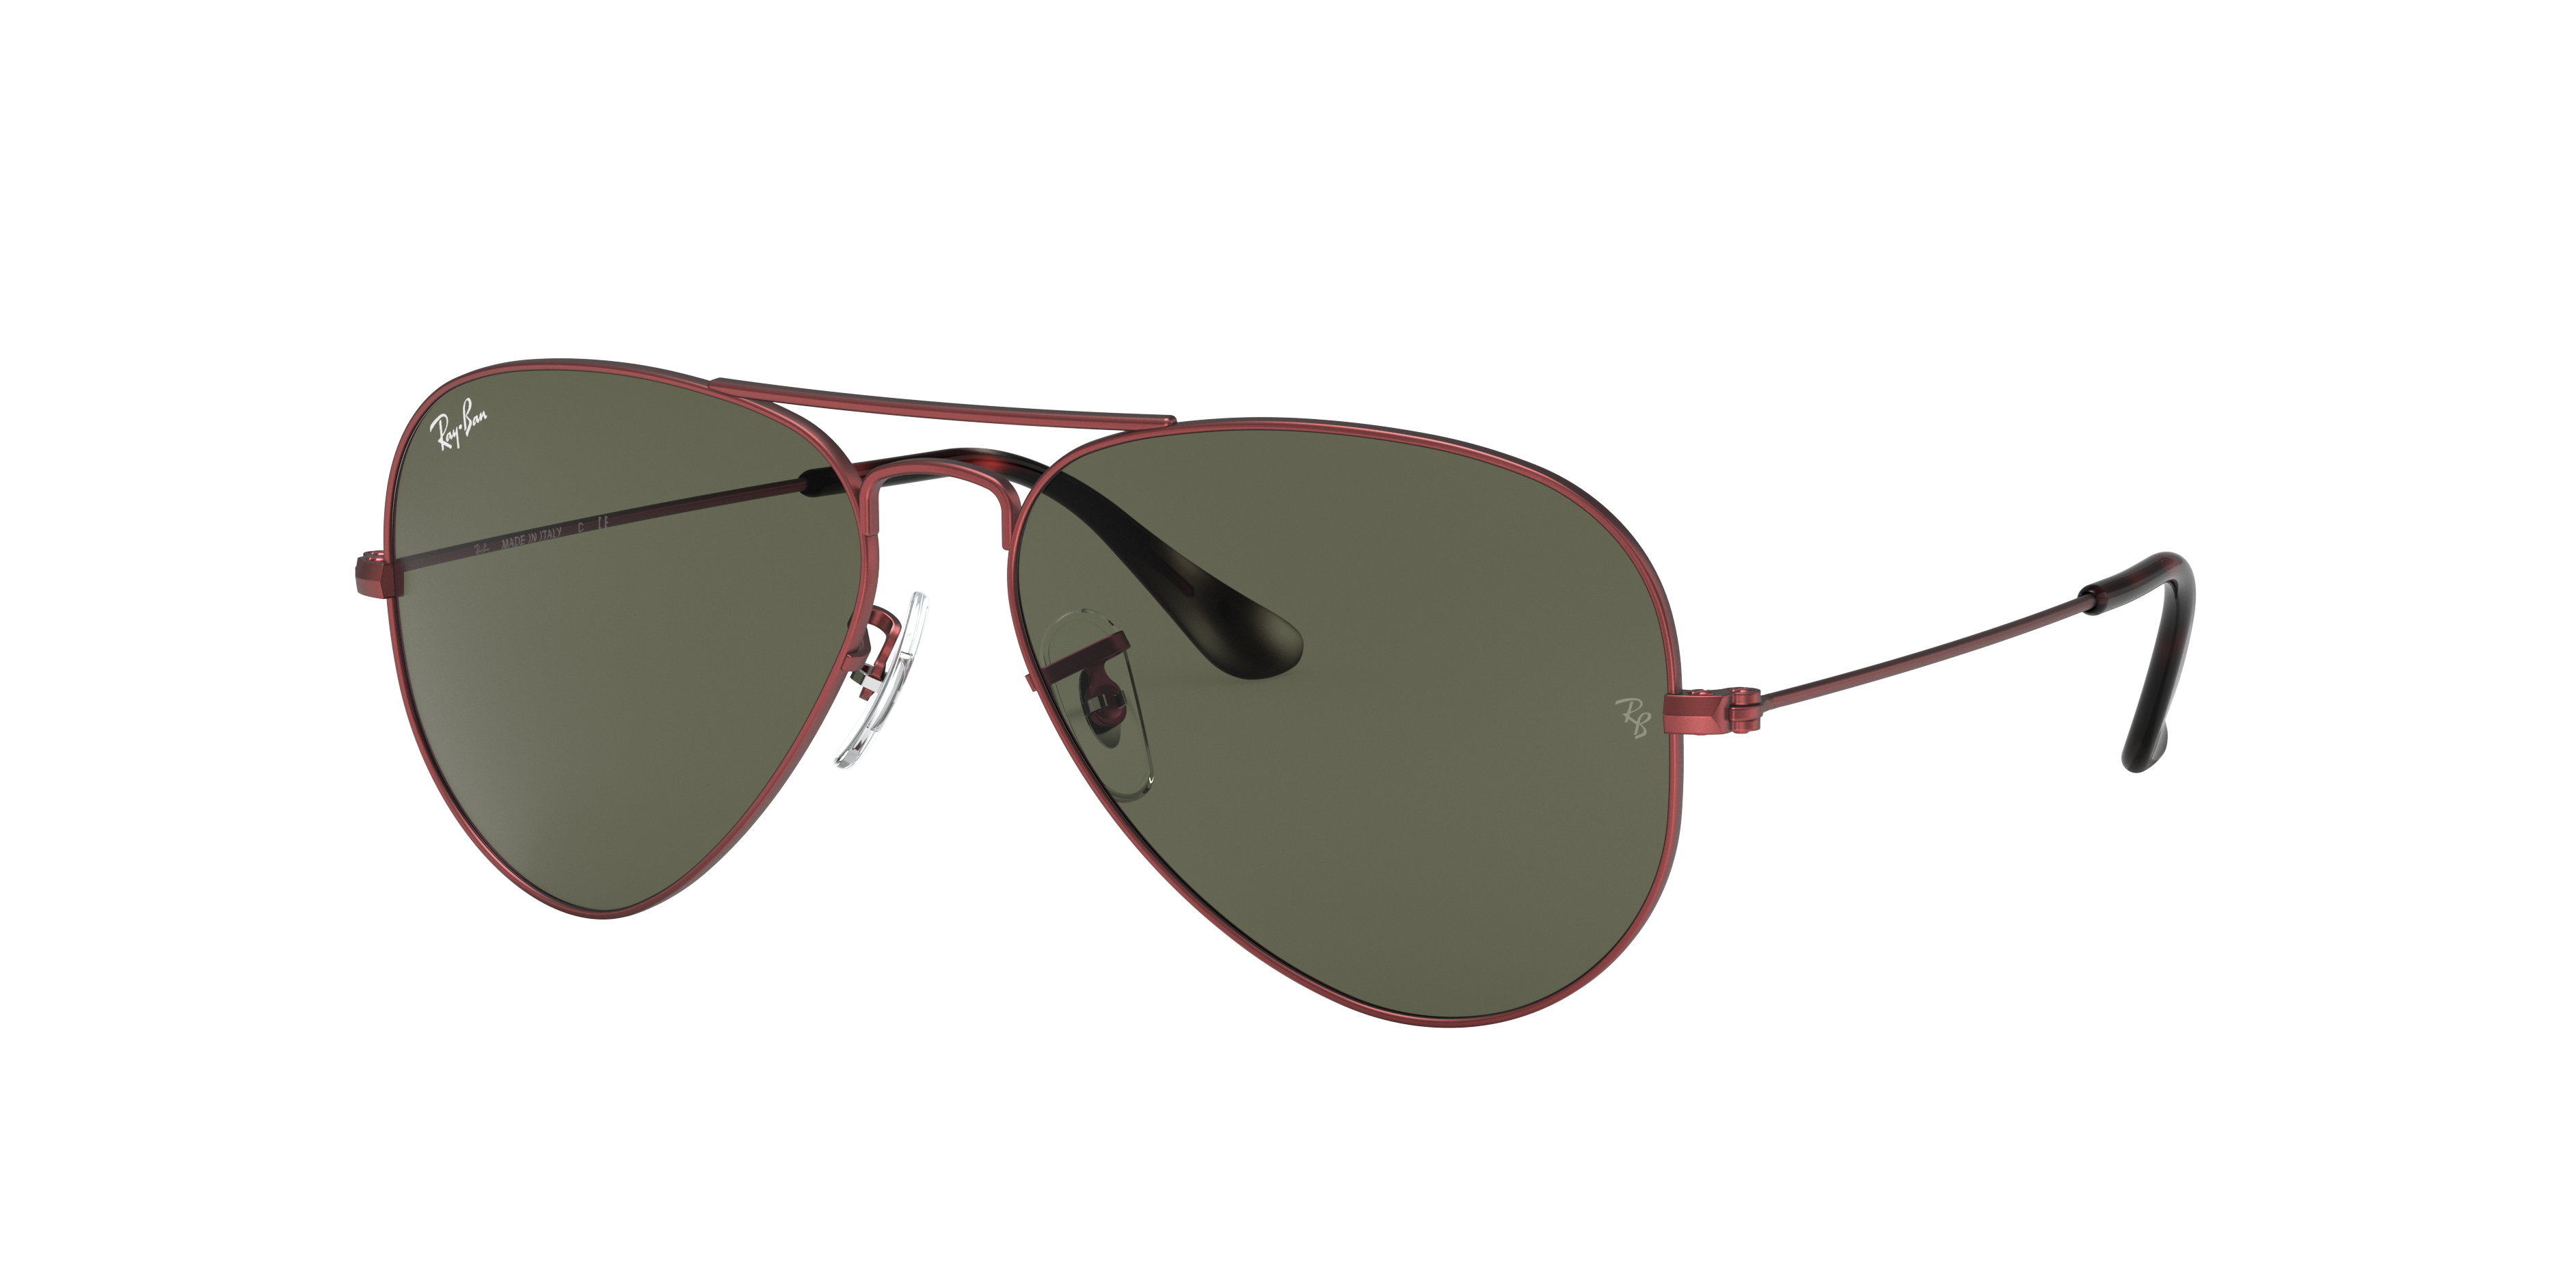 ray ban red frame aviator sunglasses